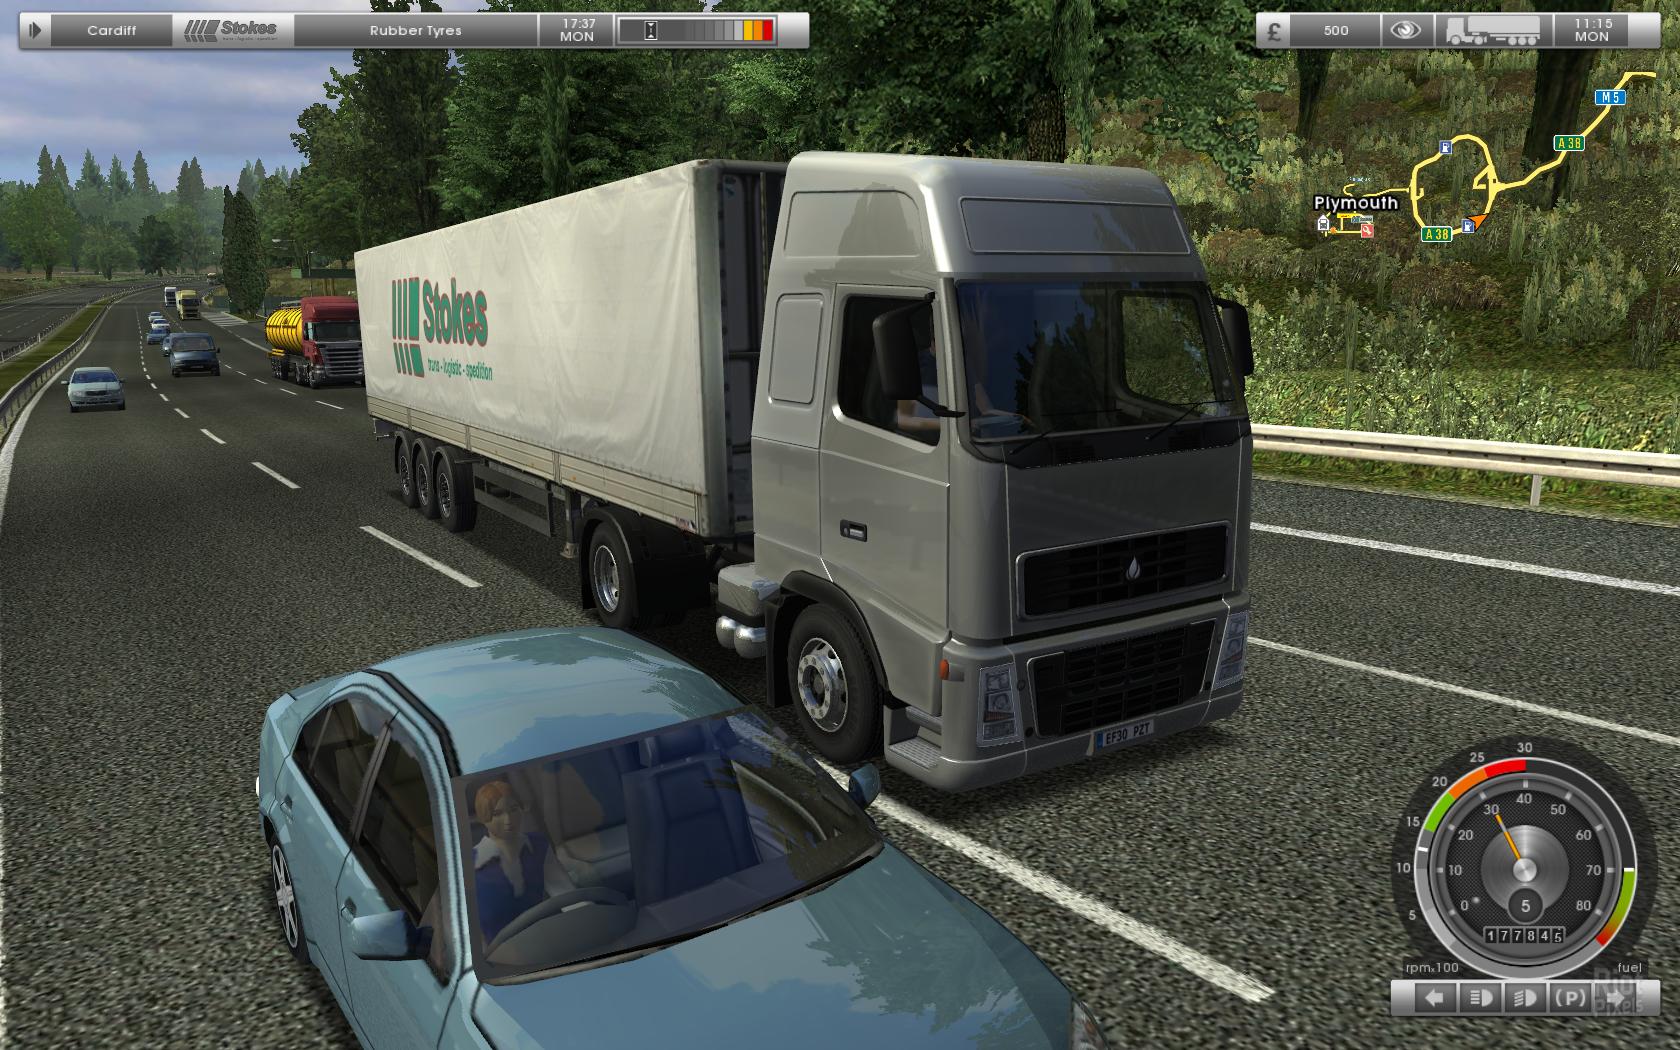 Cardiff - The Truck Simulator Wiki